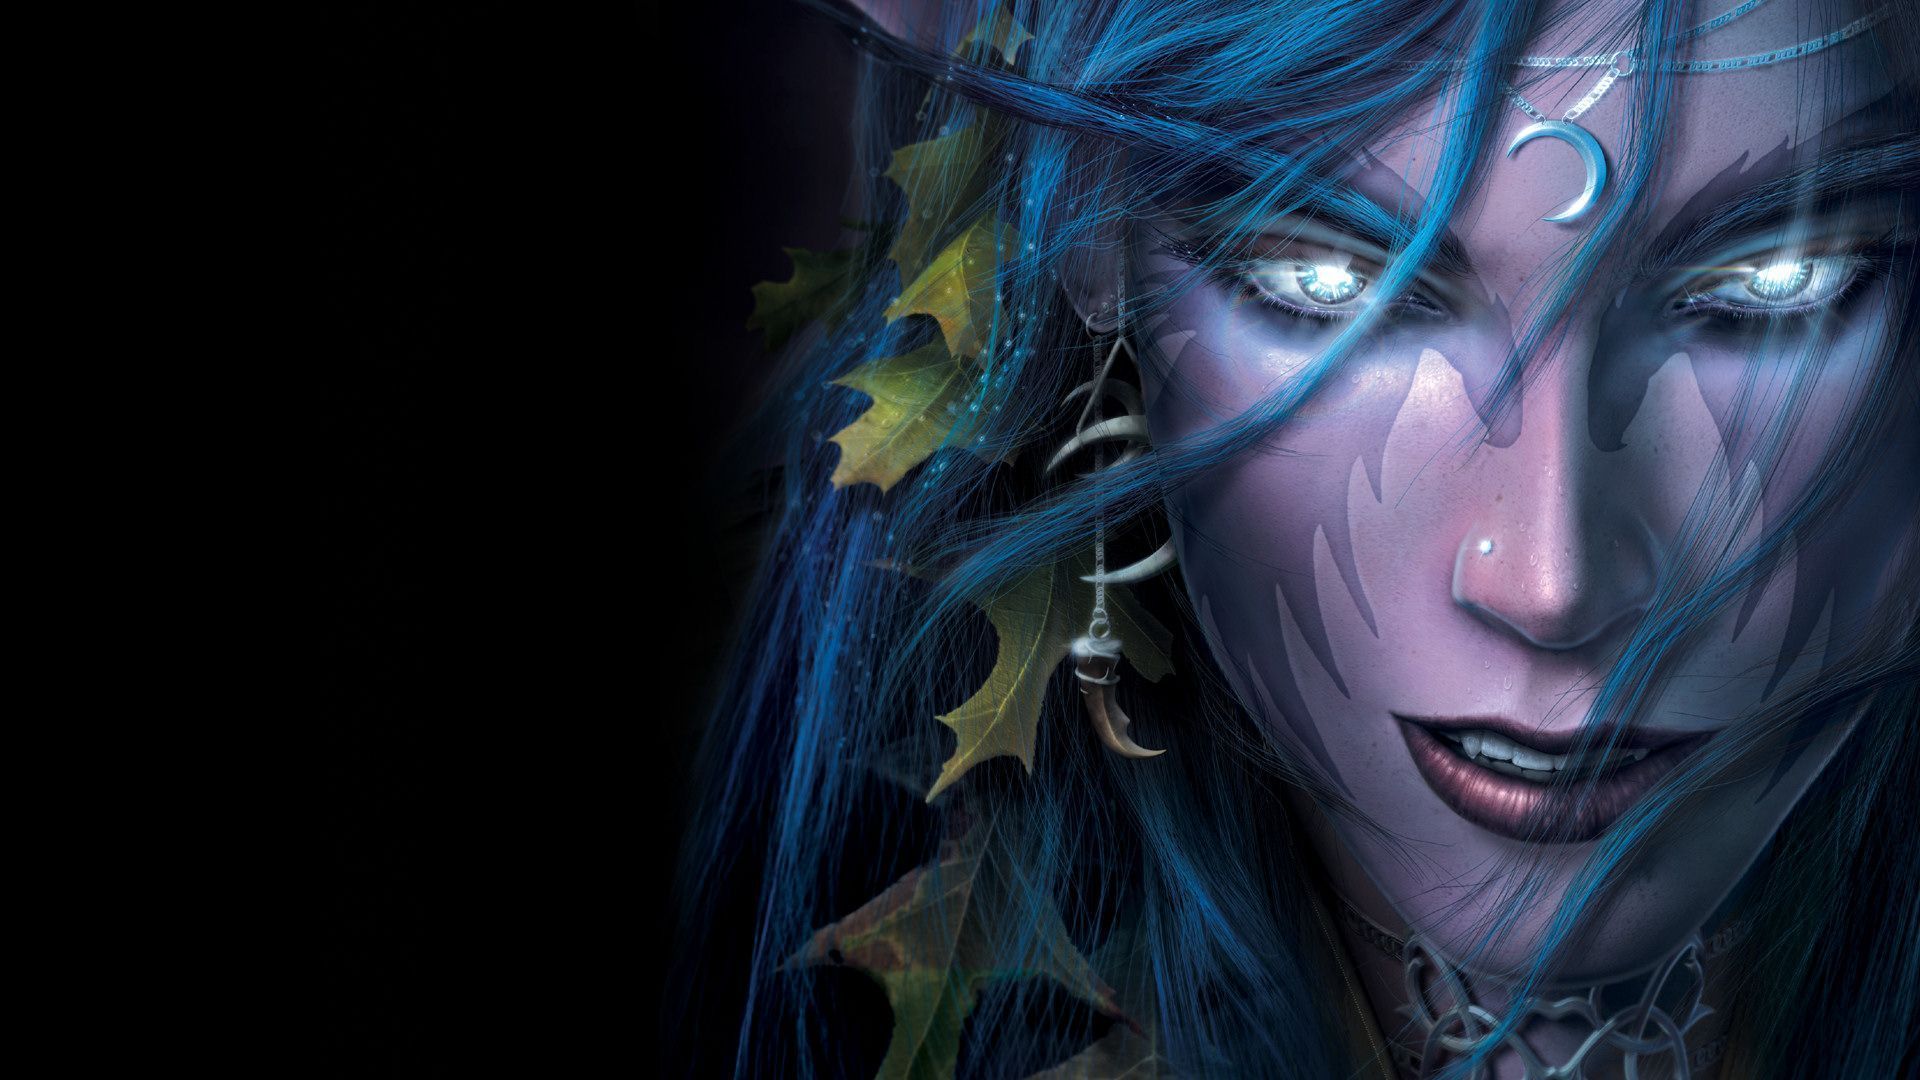 World Of Warcraft Wallpaper Images #qww0 VaLvewz.com